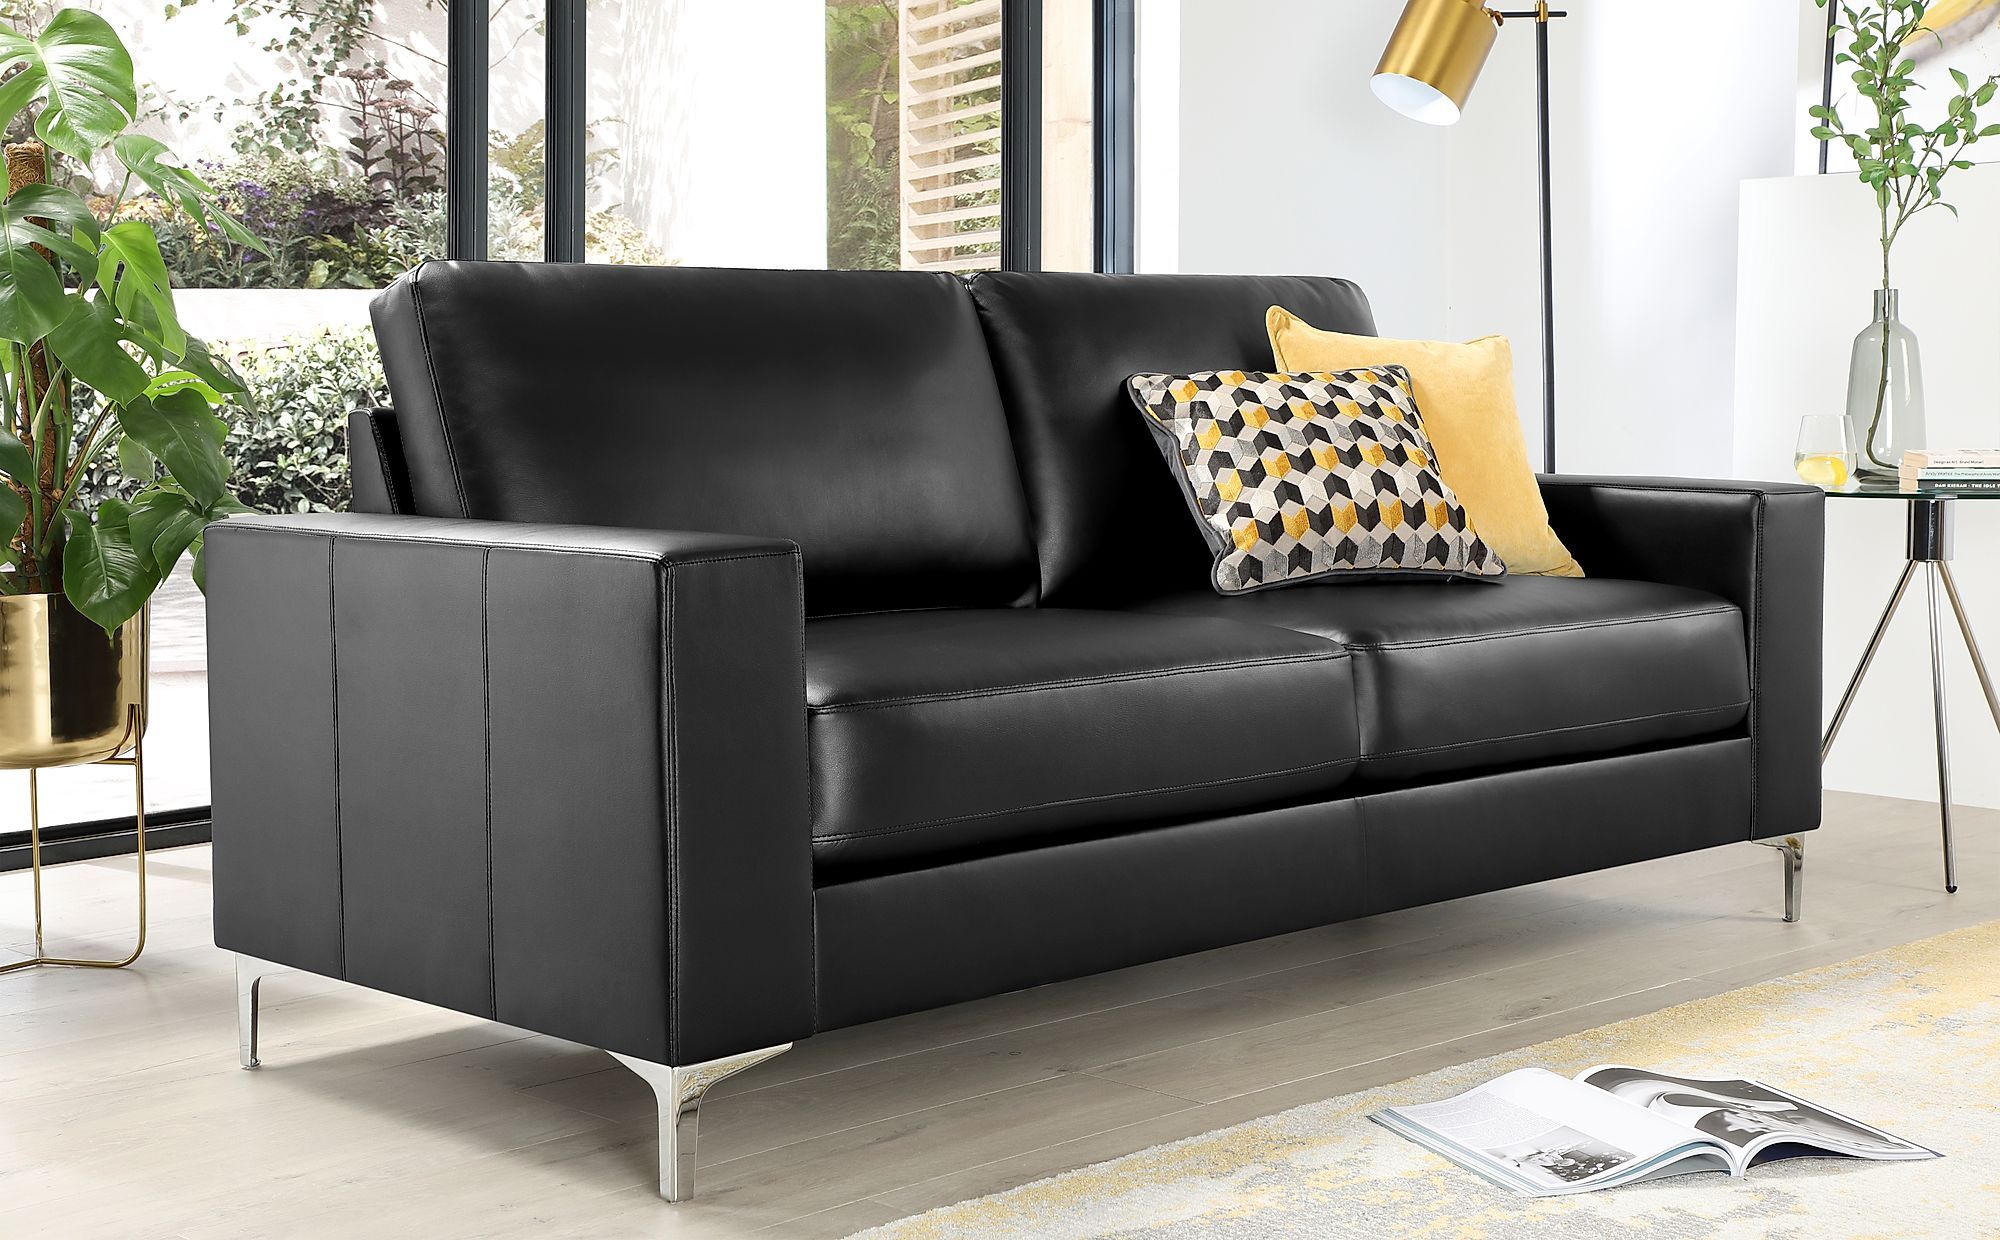 Baltimore Black Leather 3 Seater Sofa | Furniture Choice Regarding 3 Seat L Shaped Sofas In Black (Gallery 8 of 20)